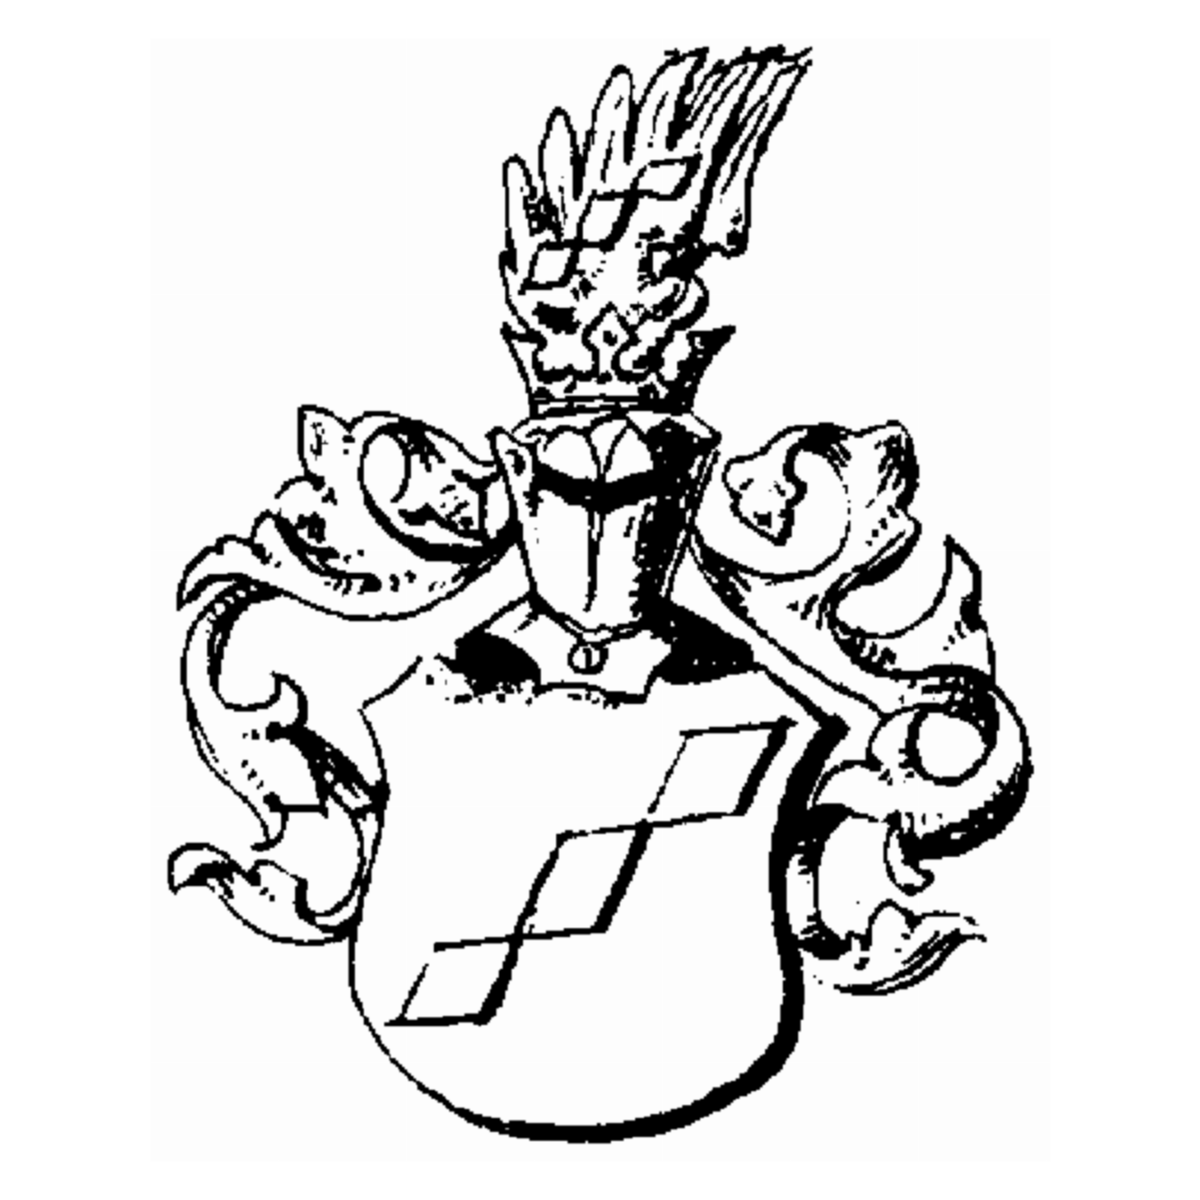 Wappen der Familie Stetfurt